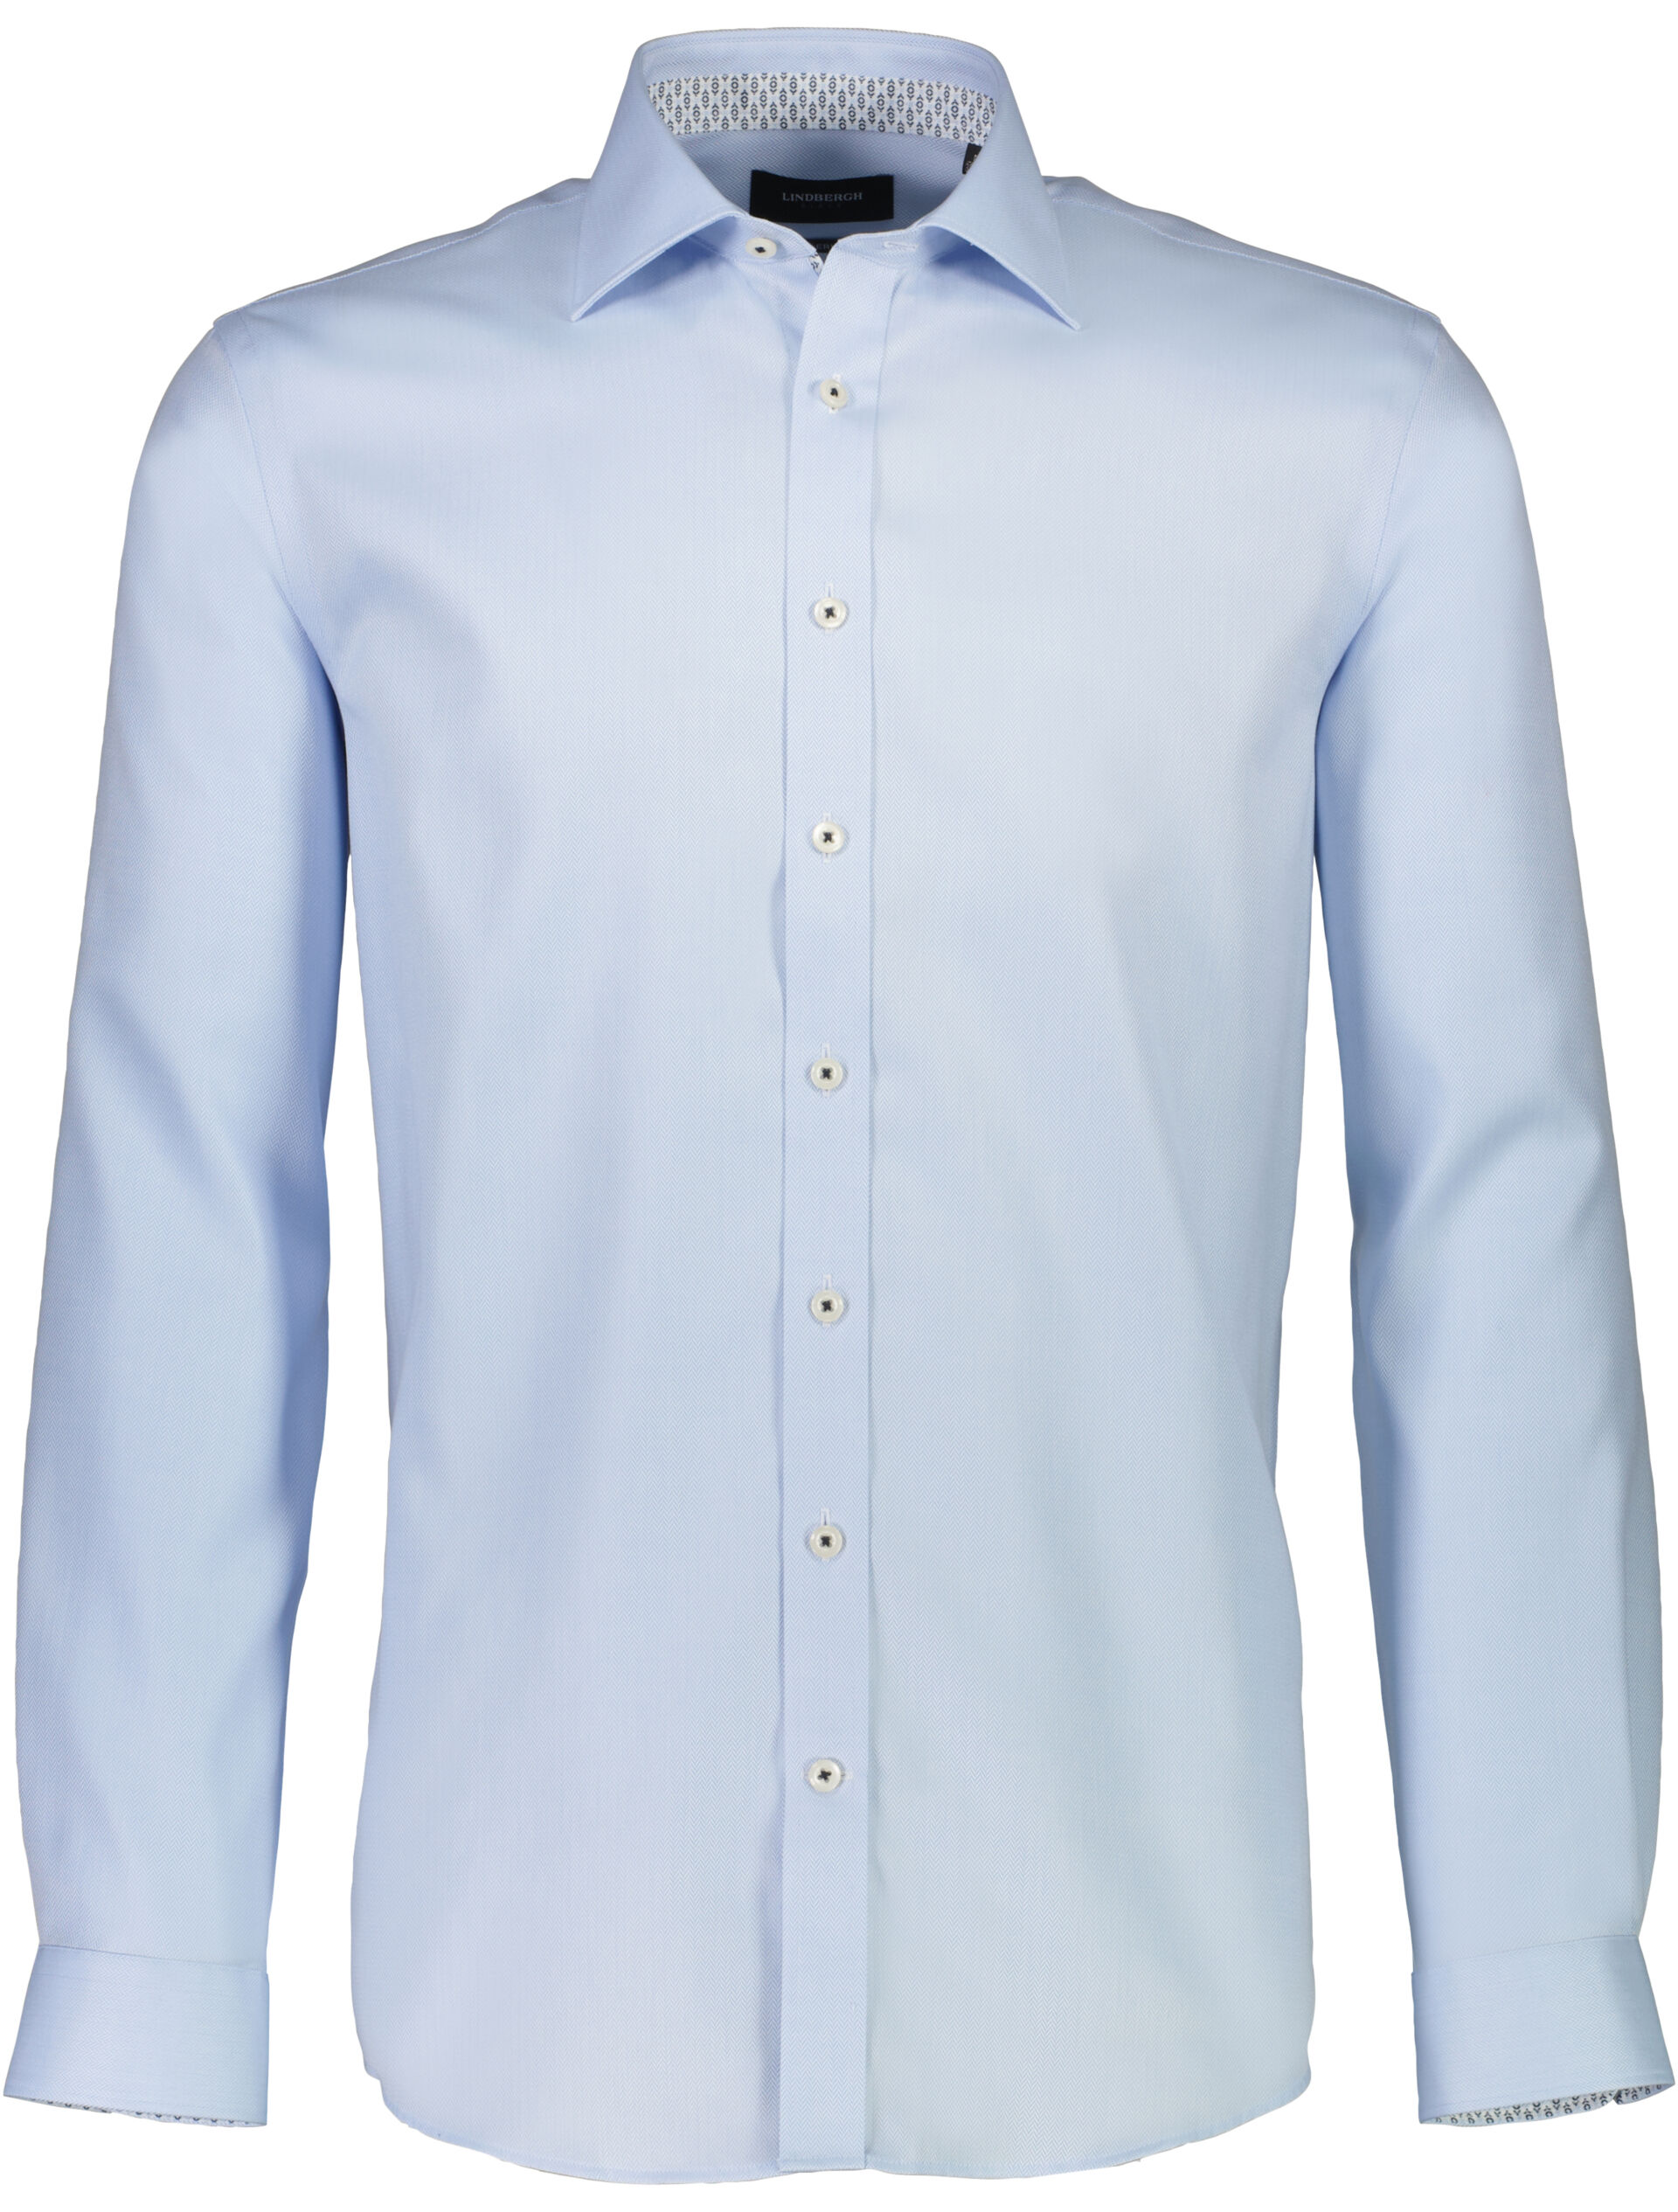 Business casual shirt 30-242202